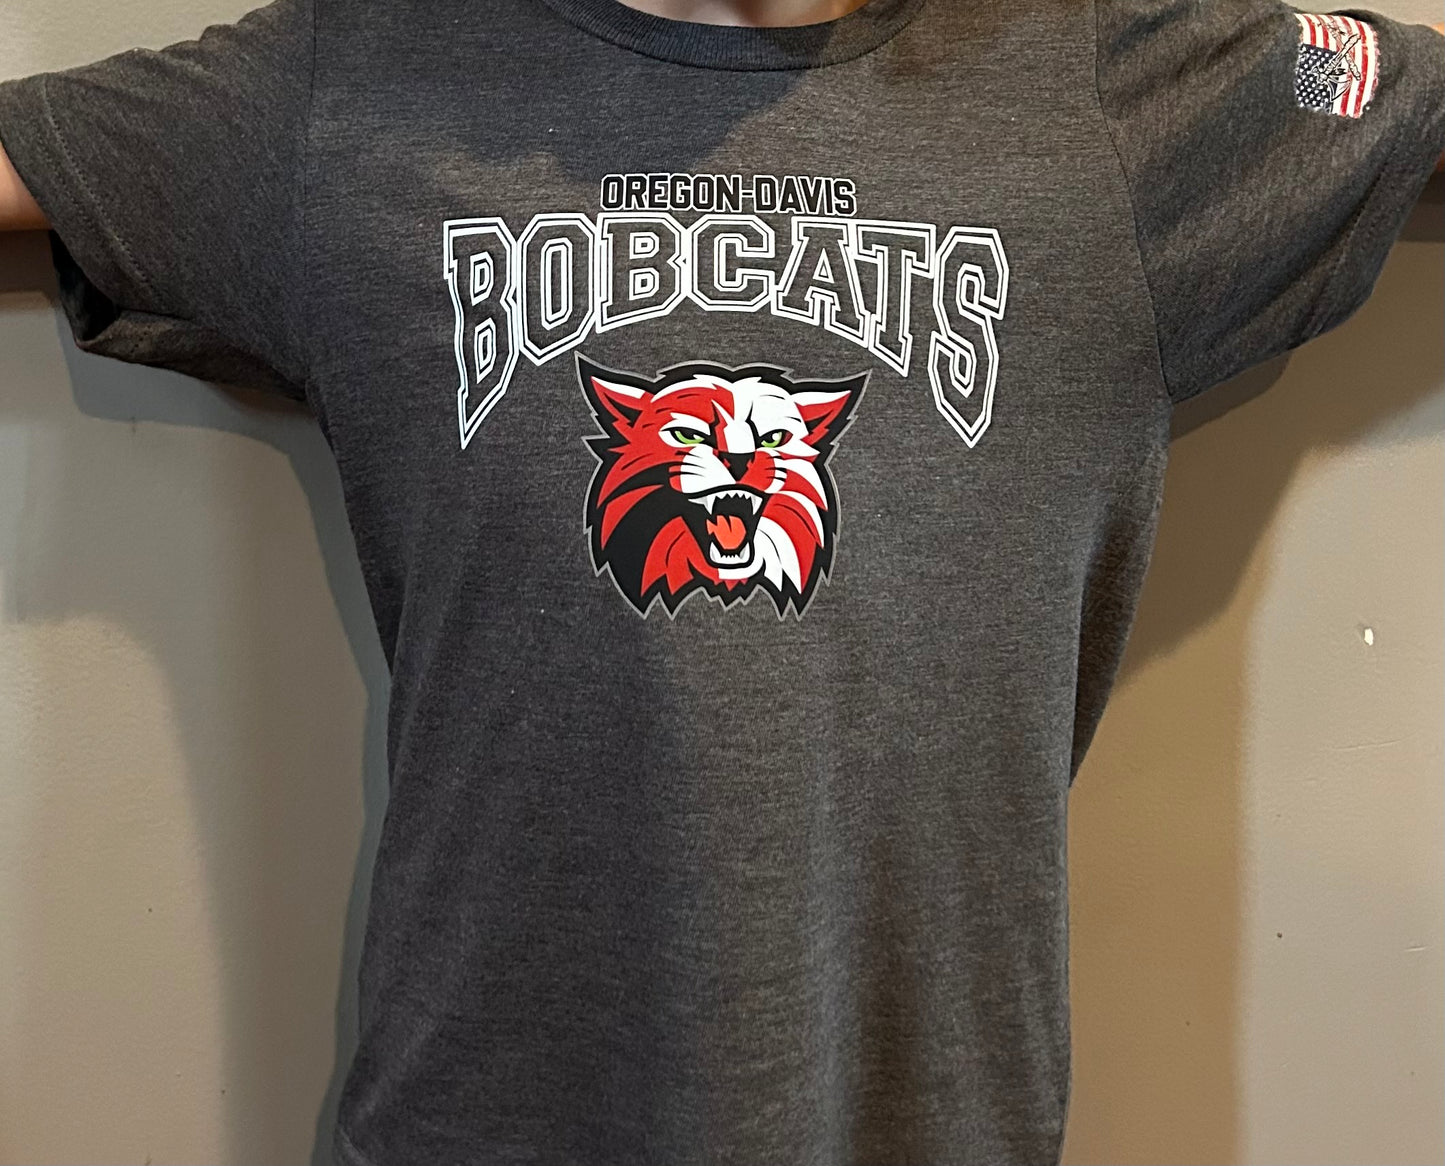 Oregon Davis Bobcats T-Shirt - Dark Grey - Adult and Youth Sizes - OD Bobcats